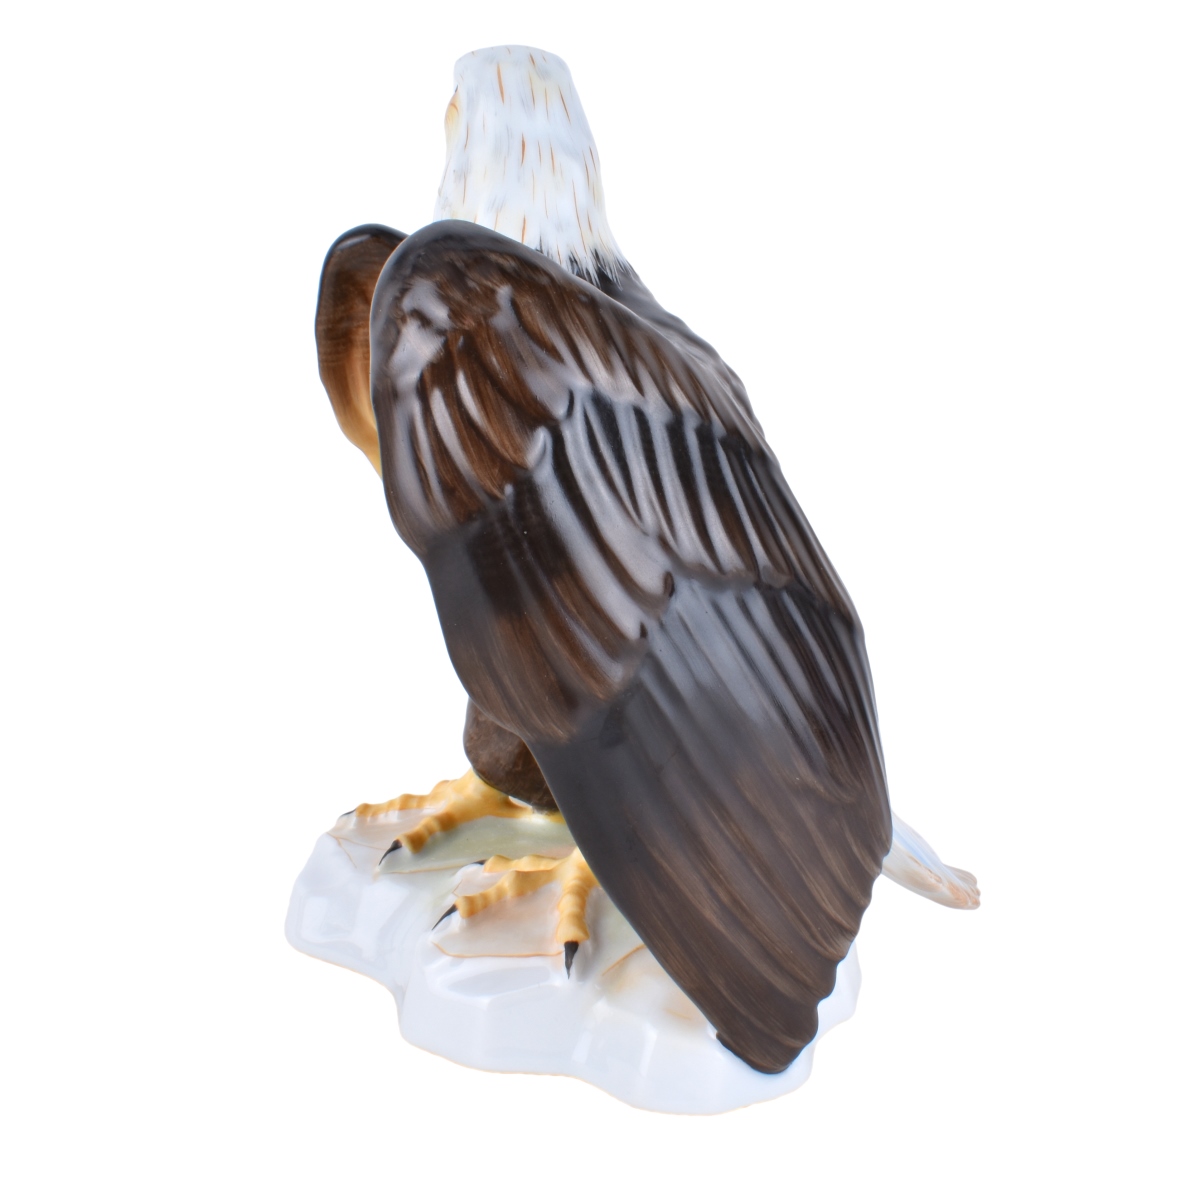 Herend Eagle Figurine